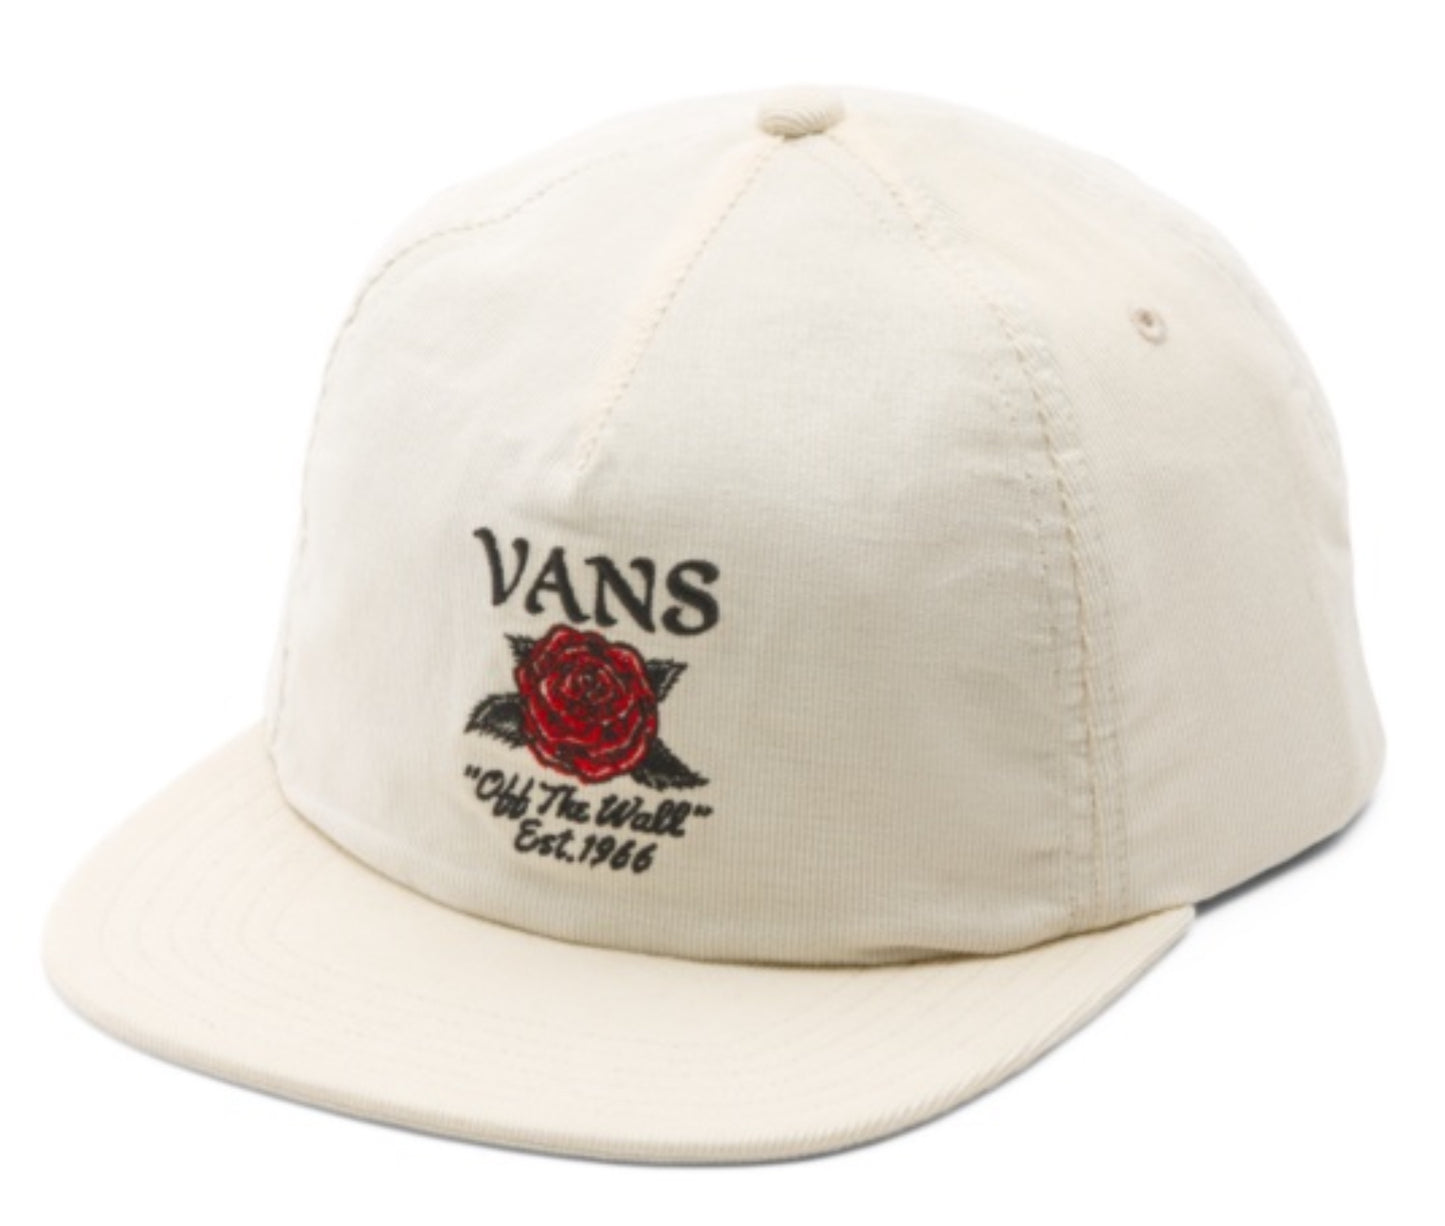 VANS HOWELL SHALLOW CAP ANTIQUE WHITE